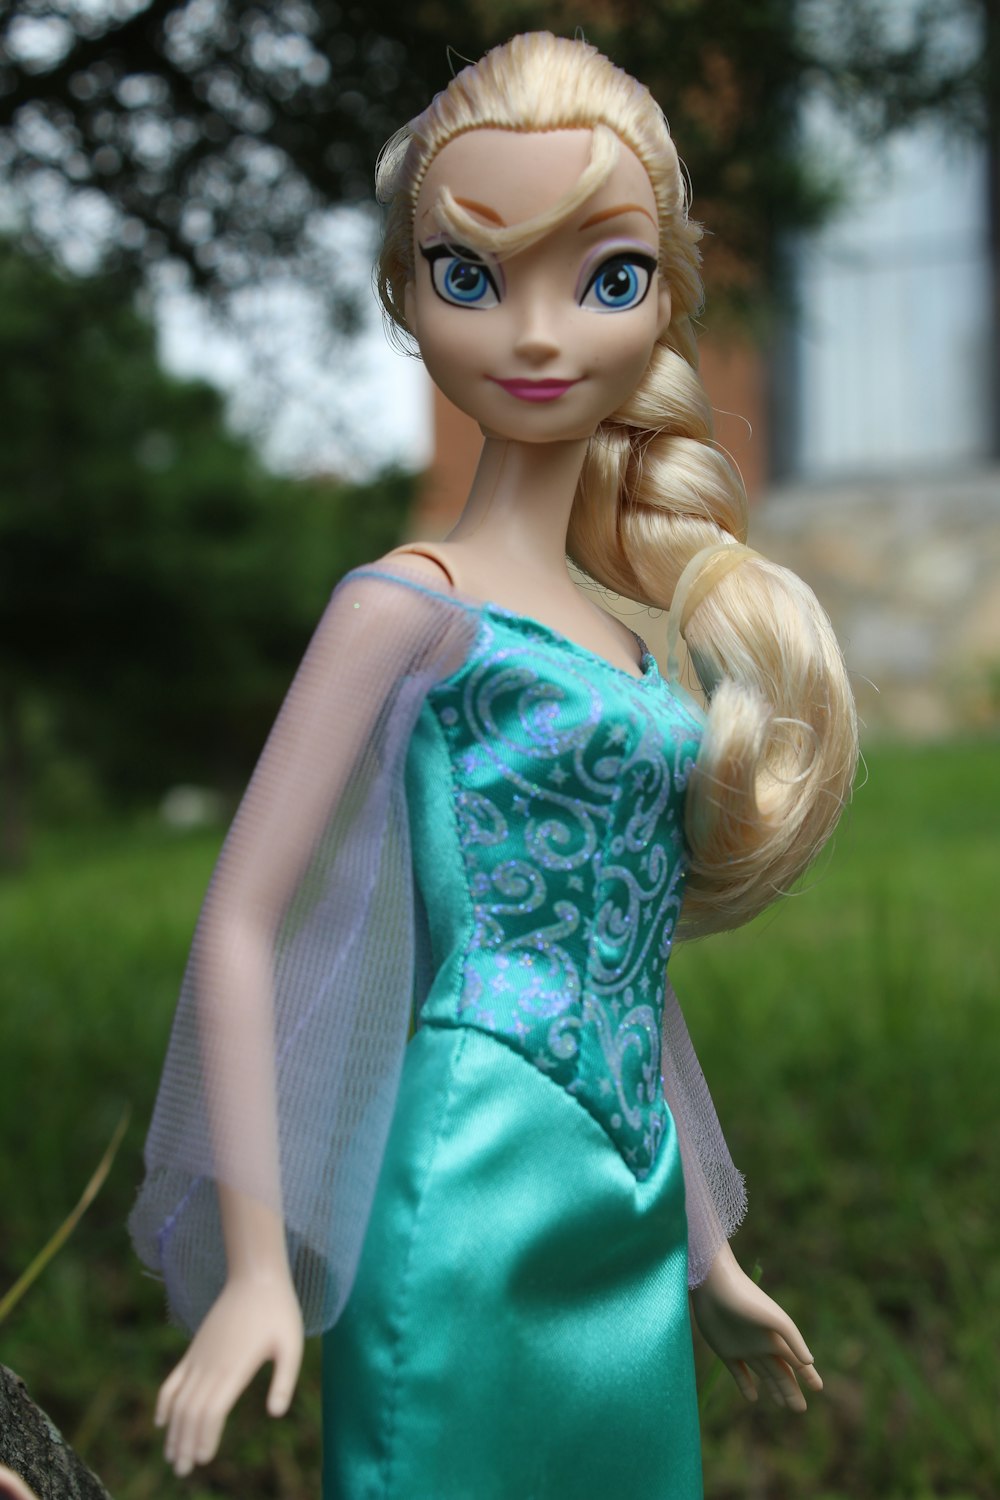 Frozen queen elsa doll photo – Free Toy Image on Unsplash